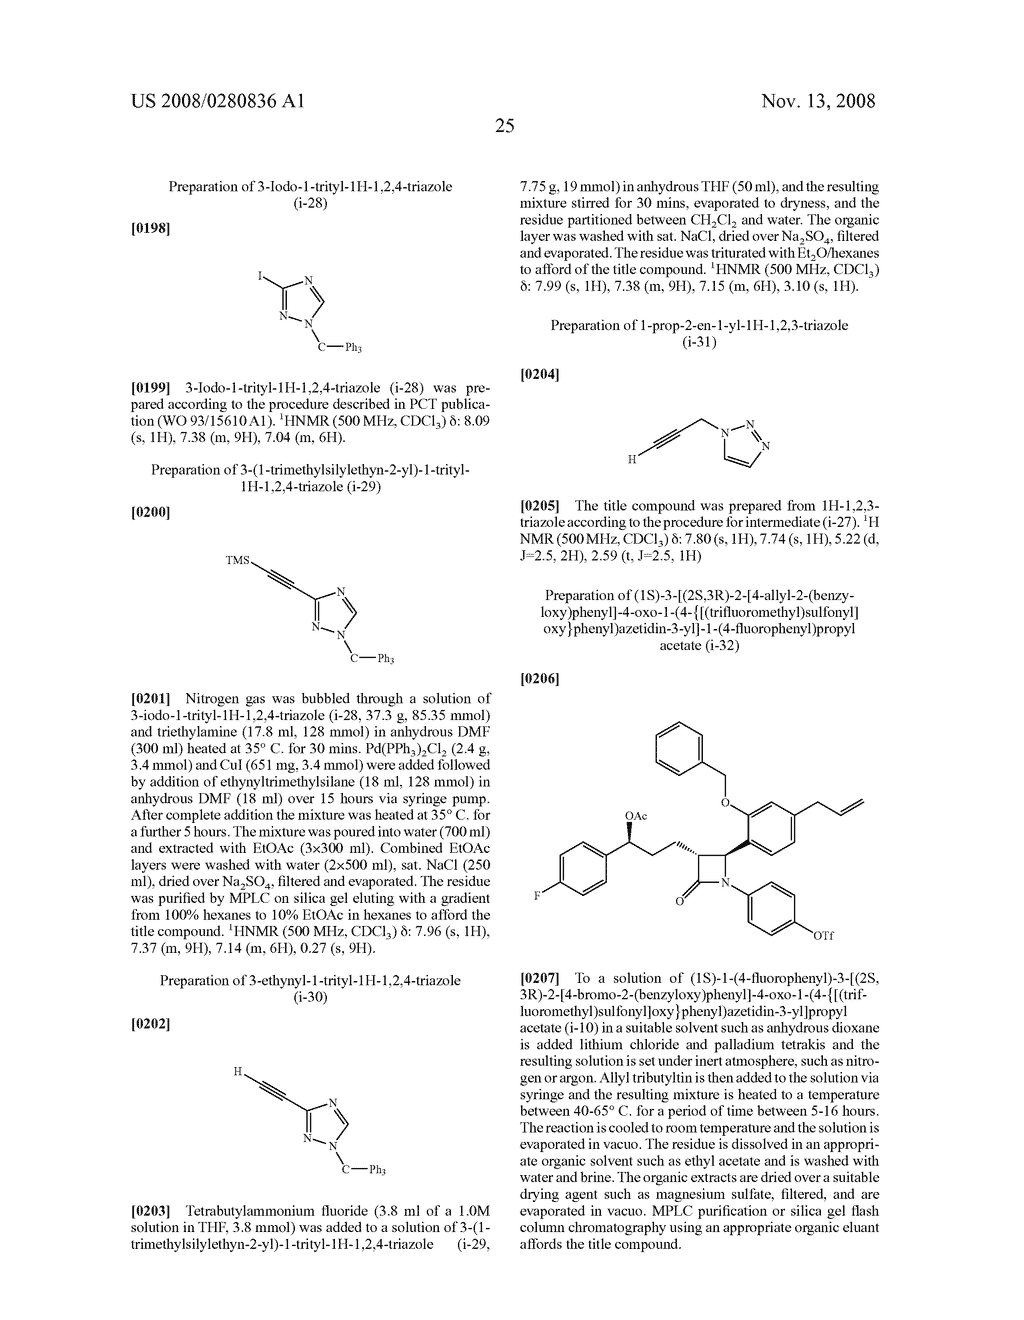 Anti-hypercholesterolemic biaryl azetidinone compounds - diagram, schematic, and image 26